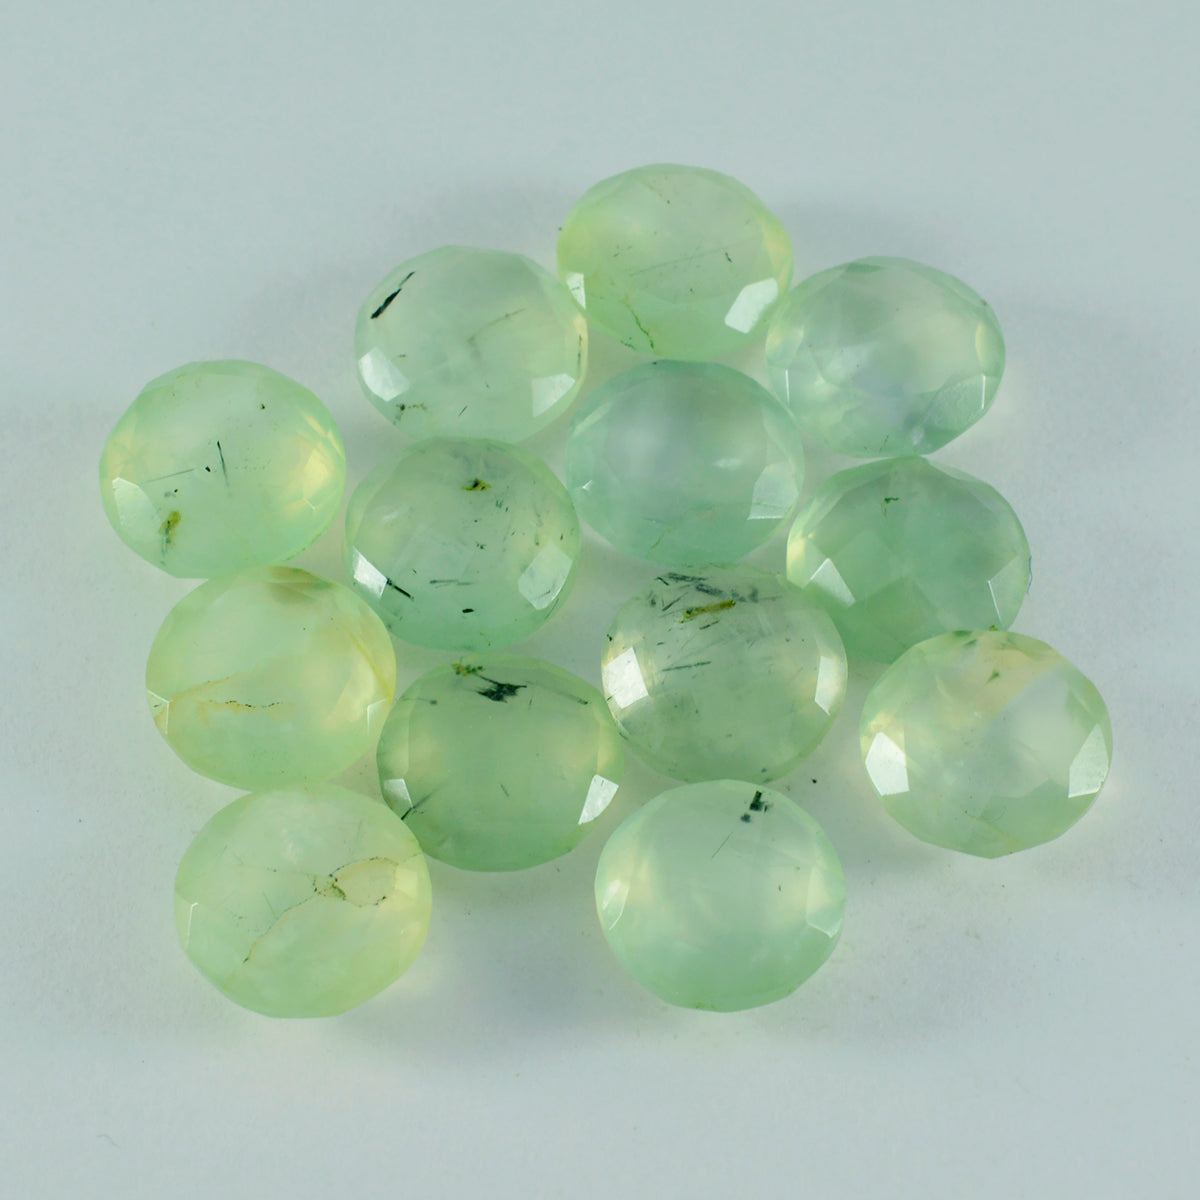 riyogems 1шт зеленый пренит ограненный 10х10 мм круглая форма а+качество камень